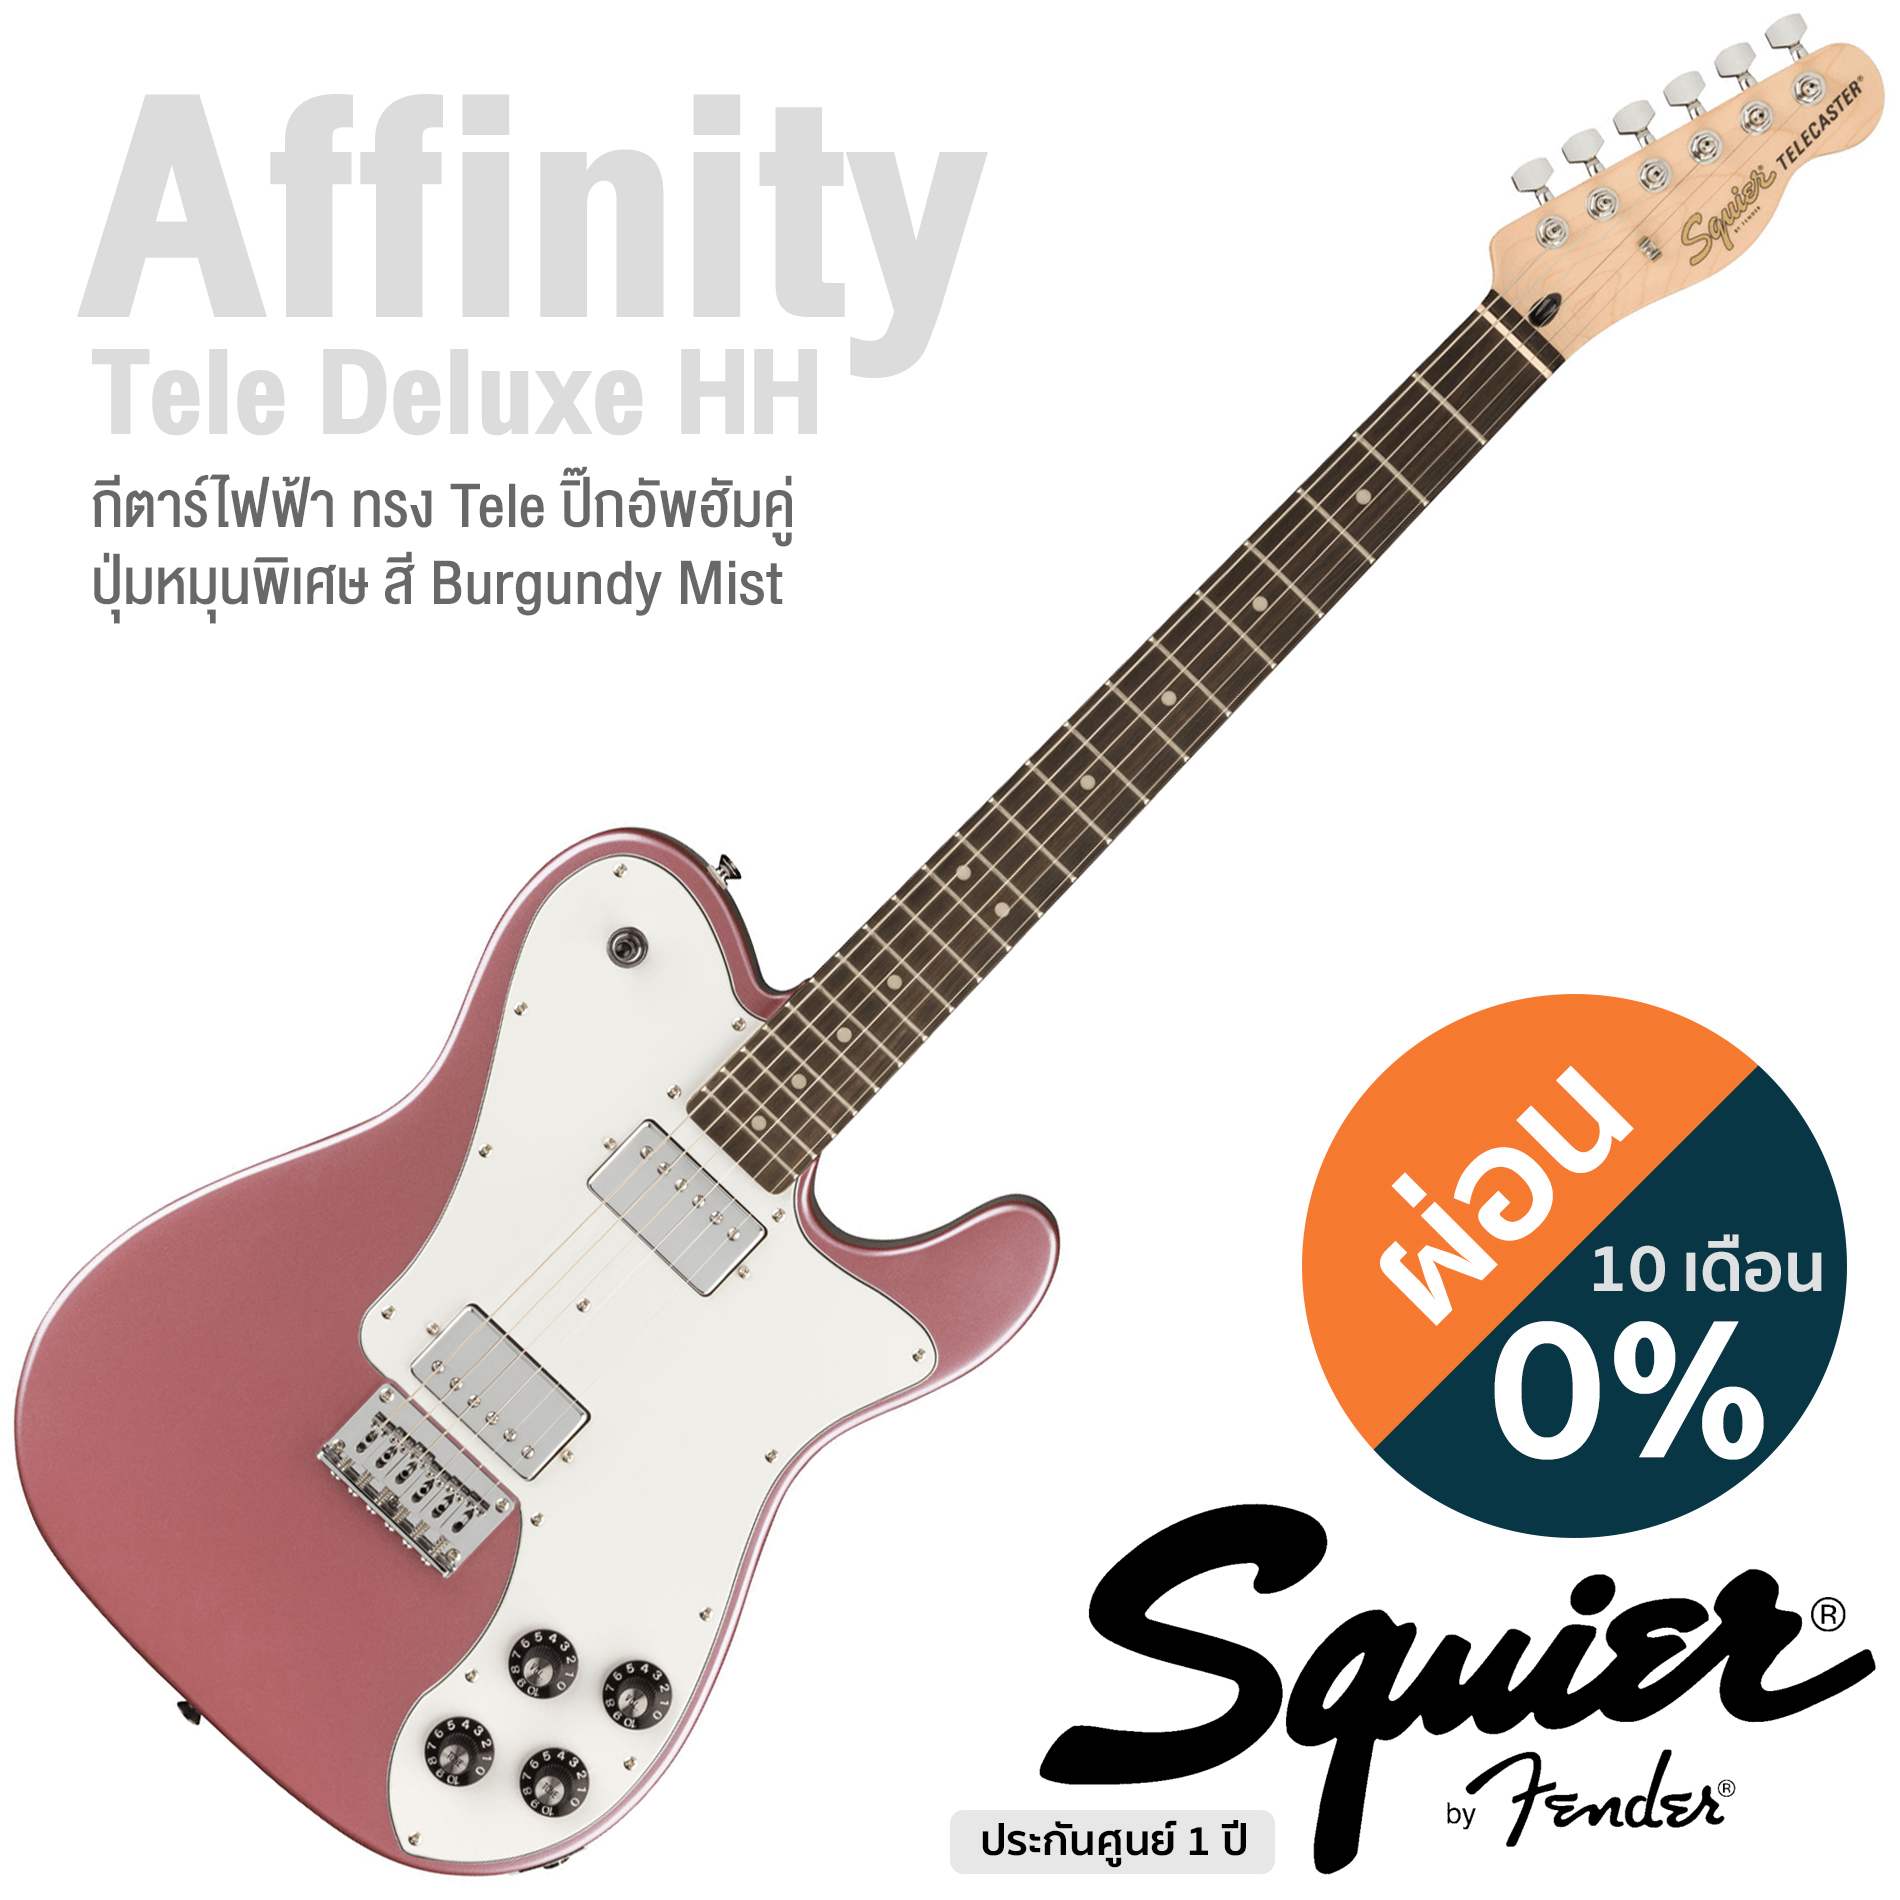 Fender® Squier Affinity Tele Deluxe กีตาร์ไฟฟ้า ทรงเทเล 21 เฟรต ไม้ป๊อปลาร์ คอเมเปิ้ล ปิ๊กอัพฮัมคู่ ** ประกันศูนย์ 1 ปี **